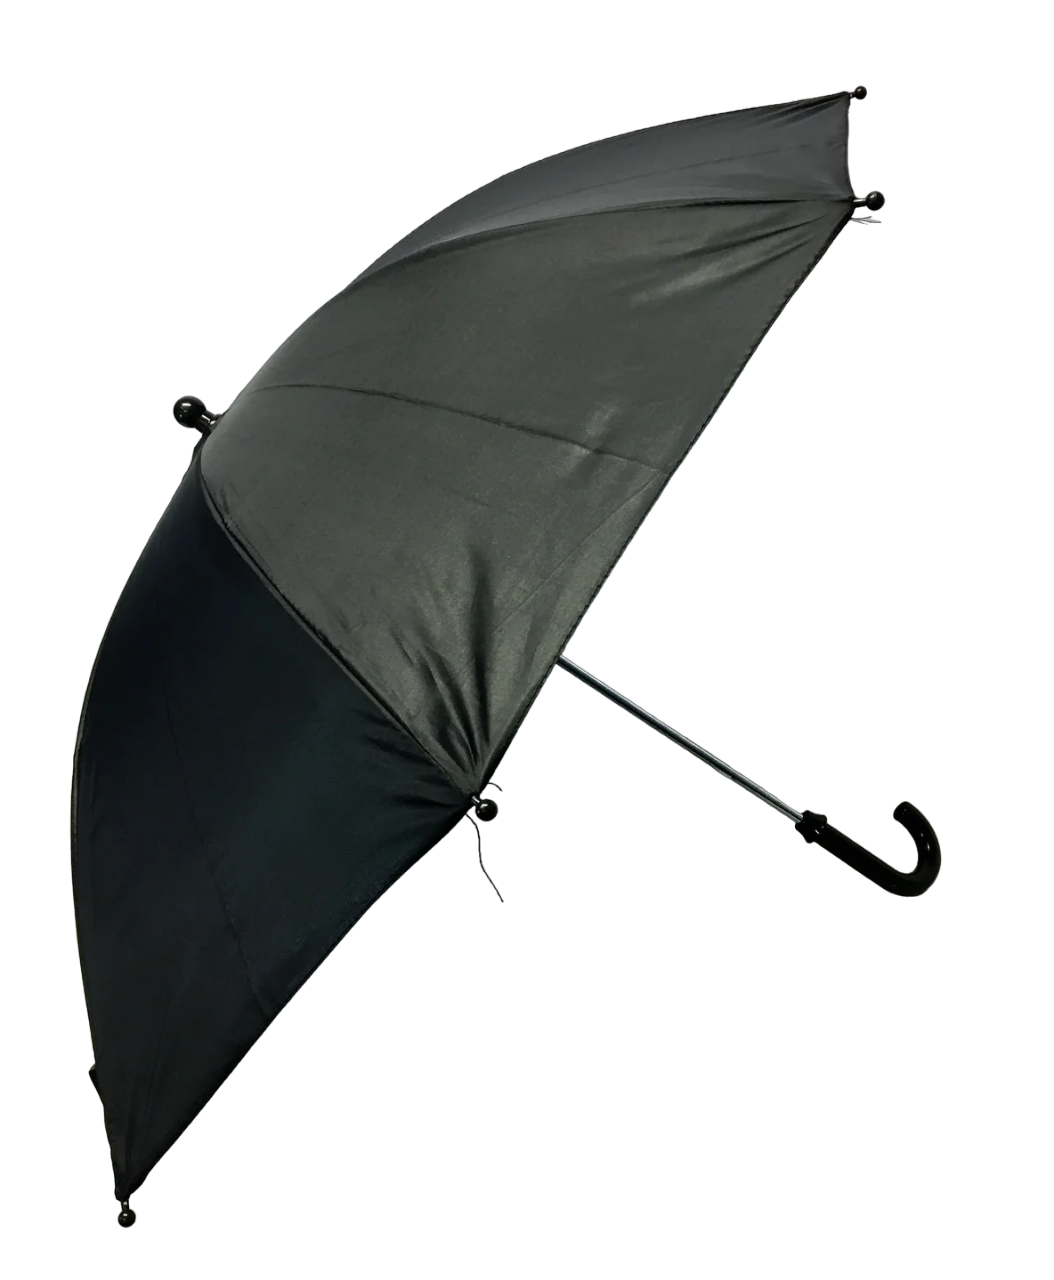 19" Black Umbrella